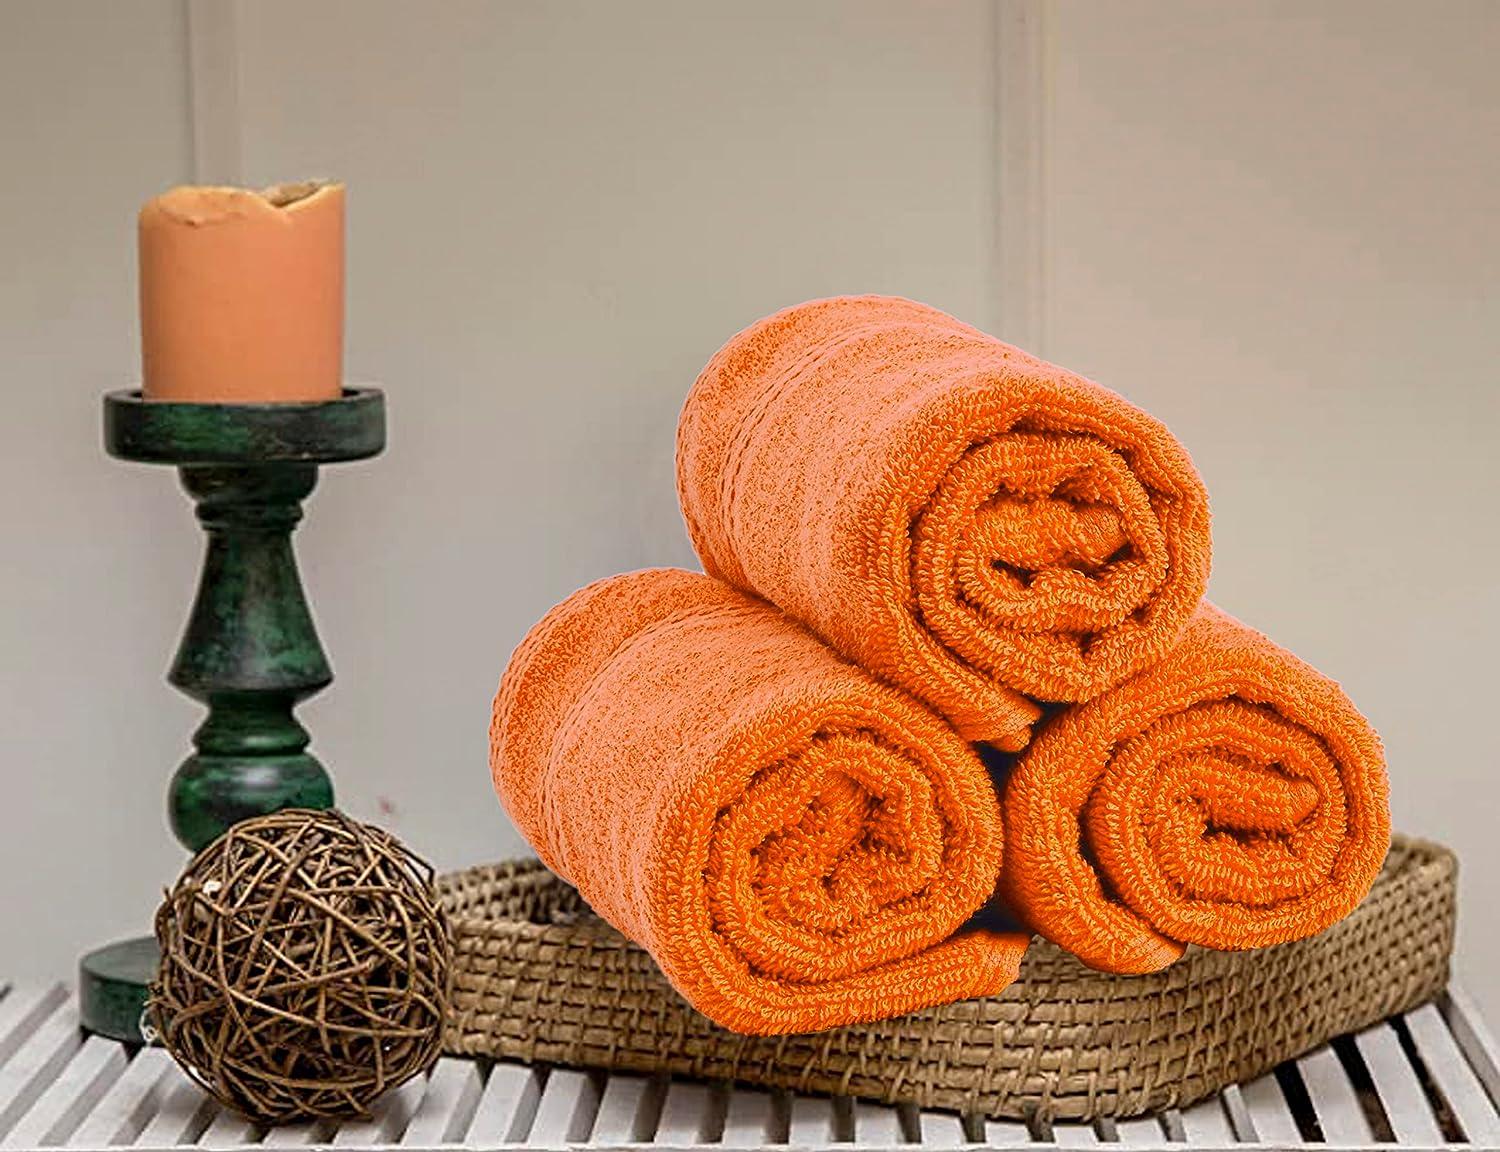 Glamburg Ultra Soft 8-Piece Towel Set - 100% Pure Ringspun Cotton, Contains 2 Oversized Bath Towels 27x54, 2 Hand Towels 16x28, 4 Wash Cloths 13x13